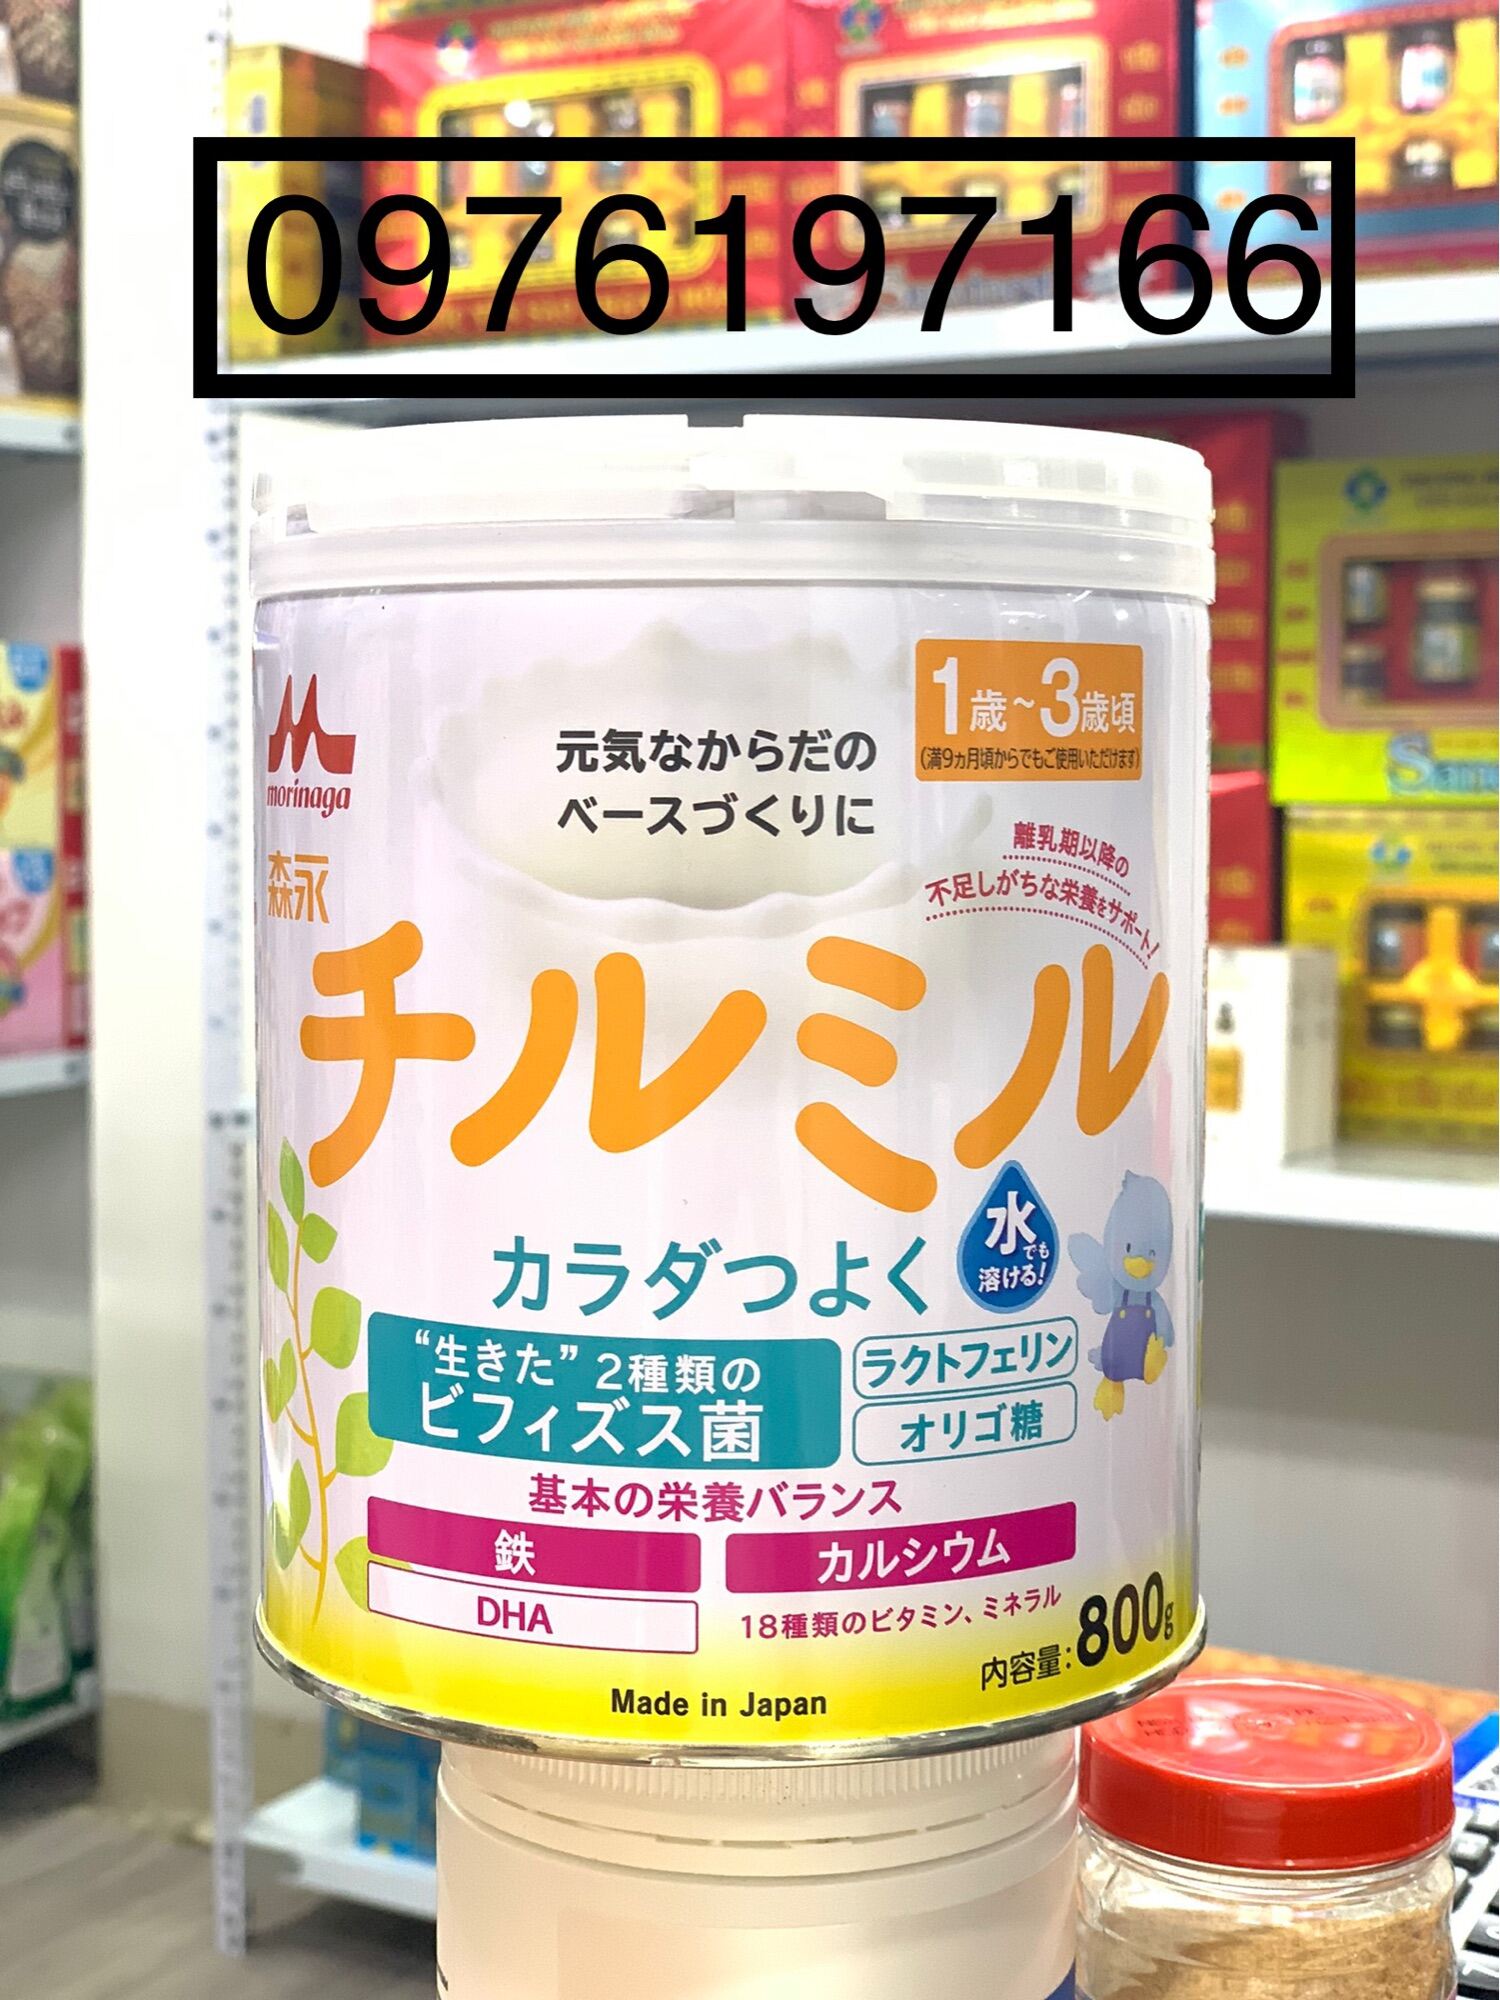 Sữa Morinaga  Date T6 2024 Date Mới Nhất